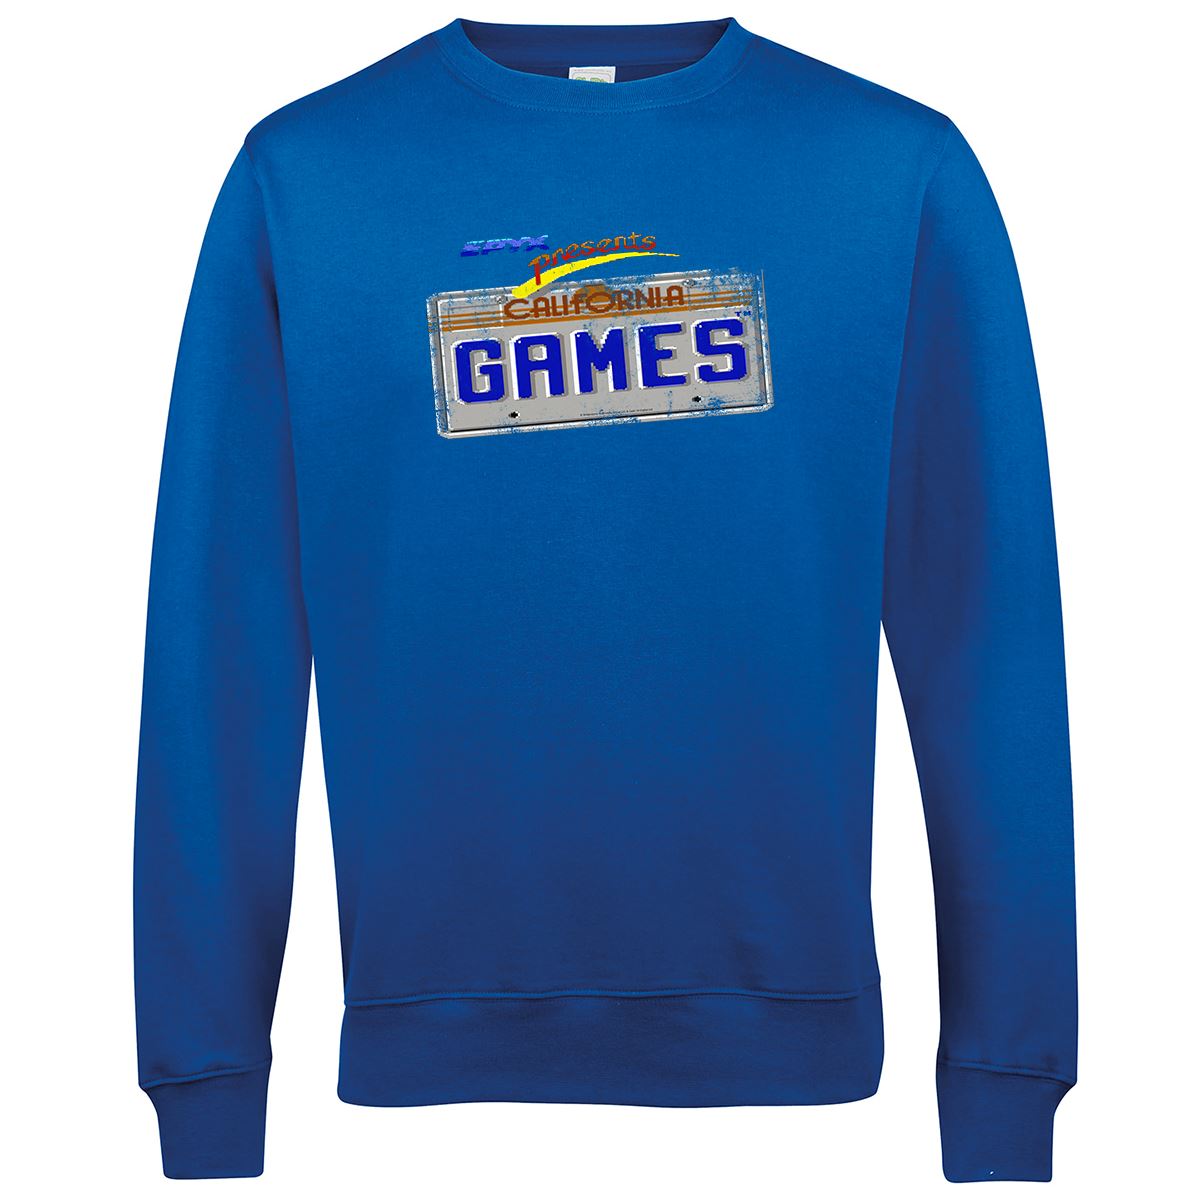 California Games 'License Plate' Retro Gaming Sweatshirt Sweatshirt Seven Squared Small Royal Blue 